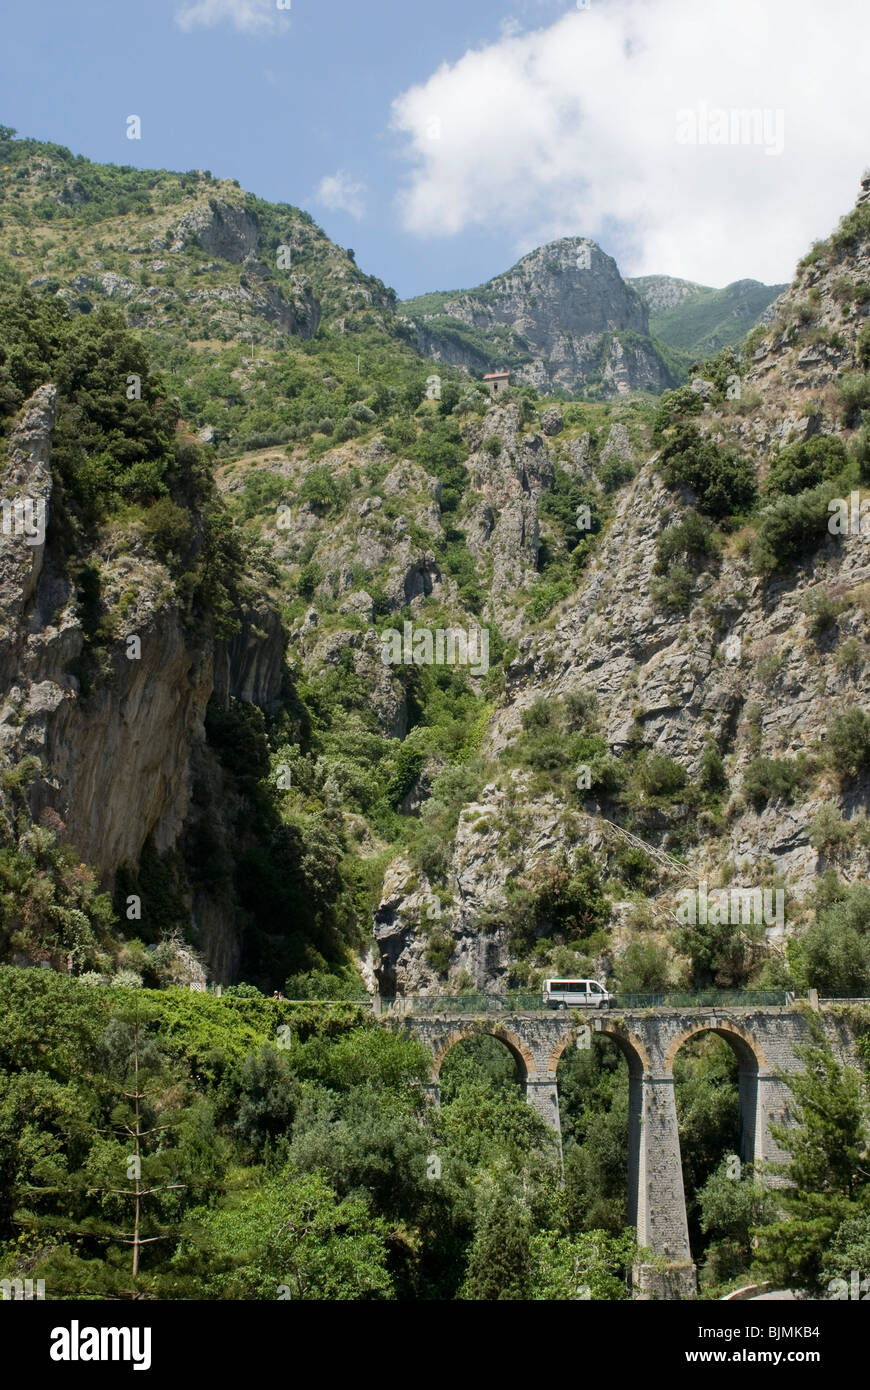 Italy, Campania, Amalfi Coast, Furore, mountains and bridge over gorge Stock Photo